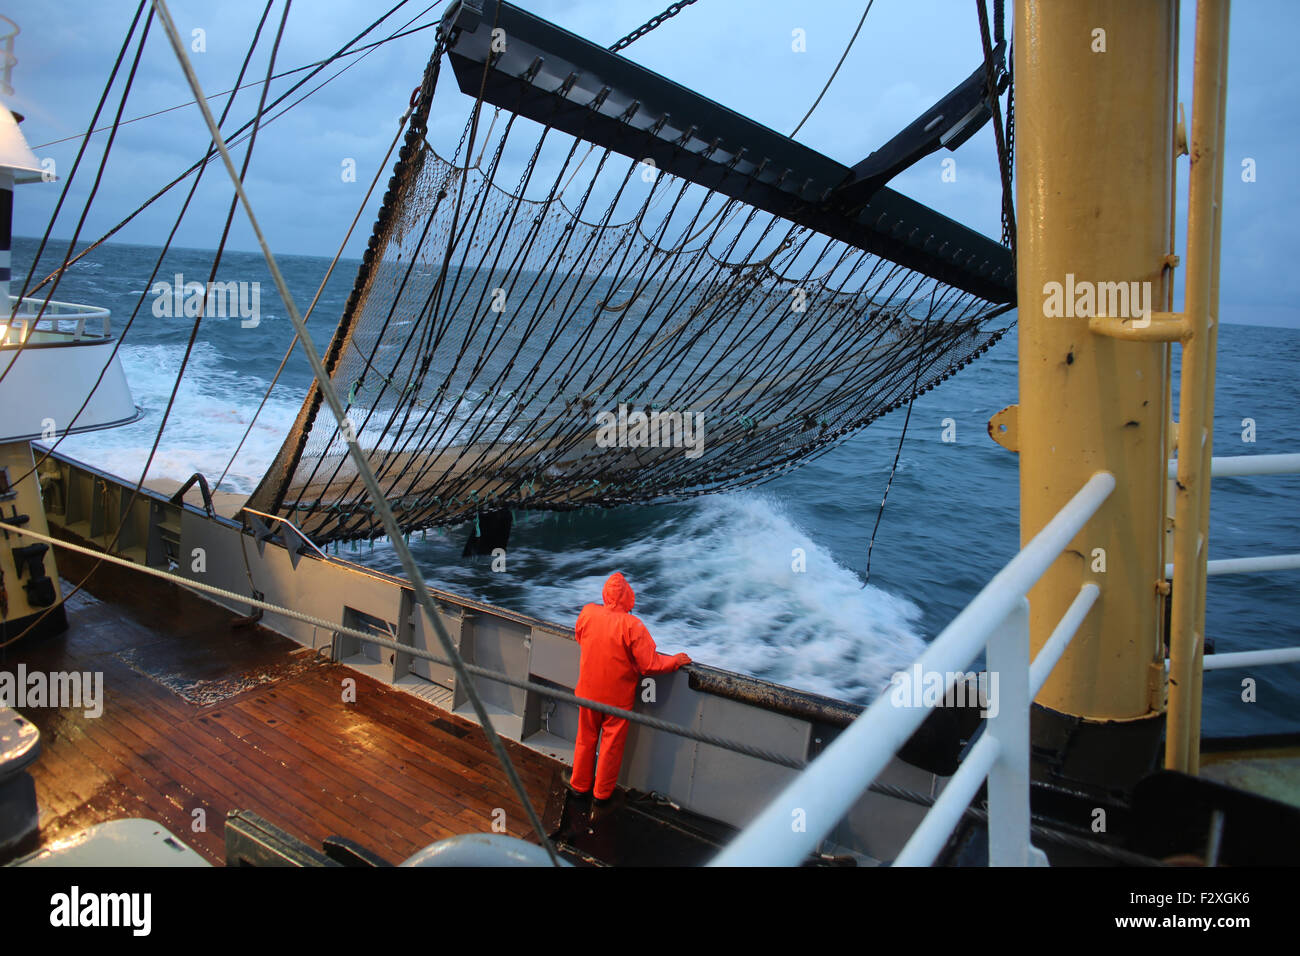 https://c8.alamy.com/comp/F2XGK6/dutch-fishing-vessel-fishing-on-the-north-sea-for-sole-and-flounder-F2XGK6.jpg